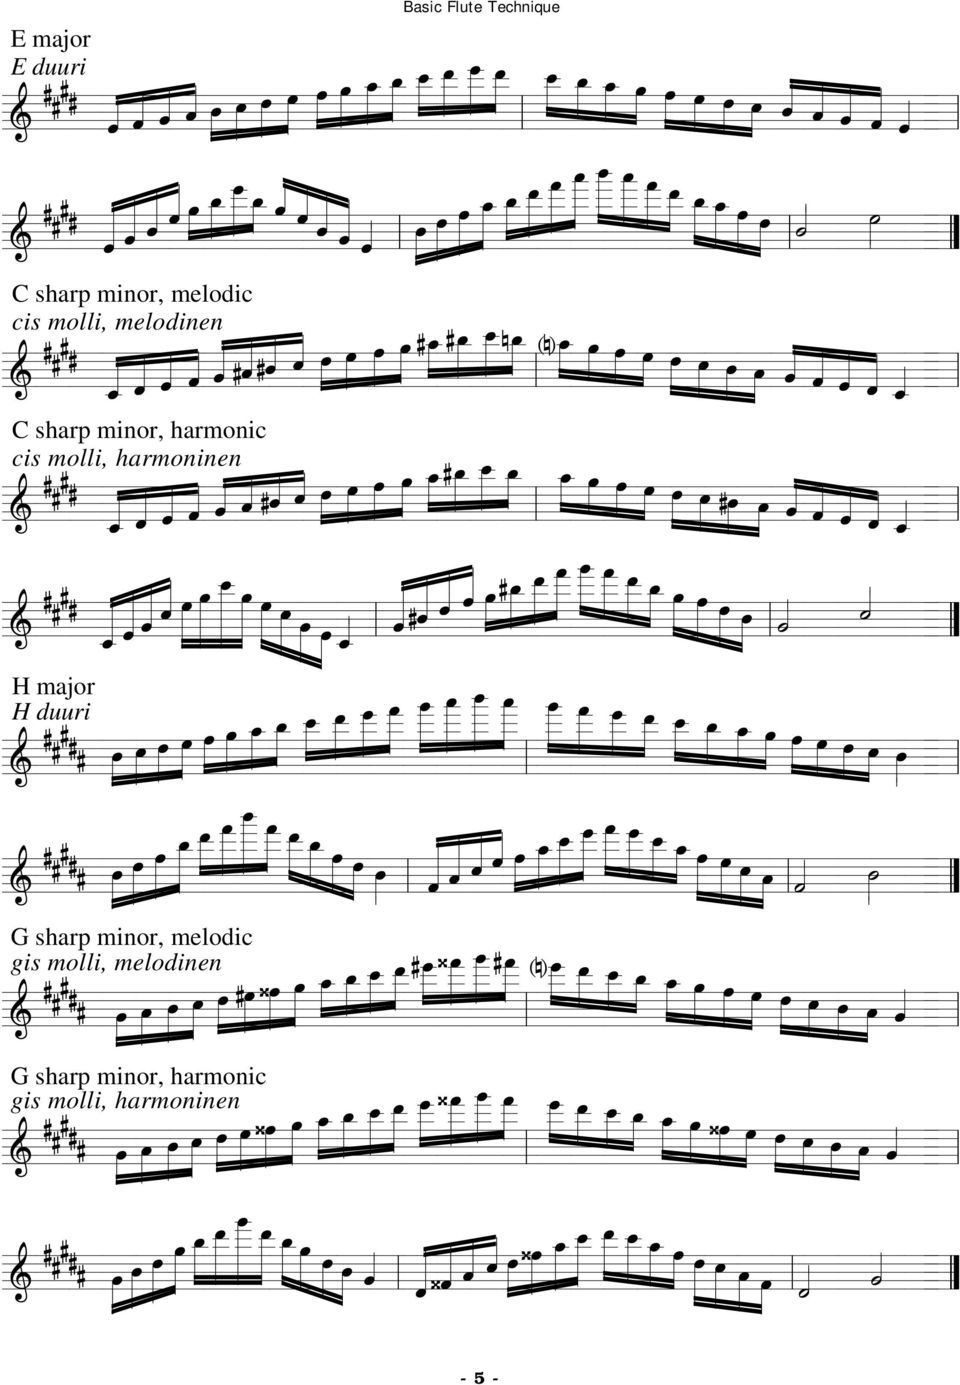 molli, harmoninen H major H duuri G sharp minor, melodic